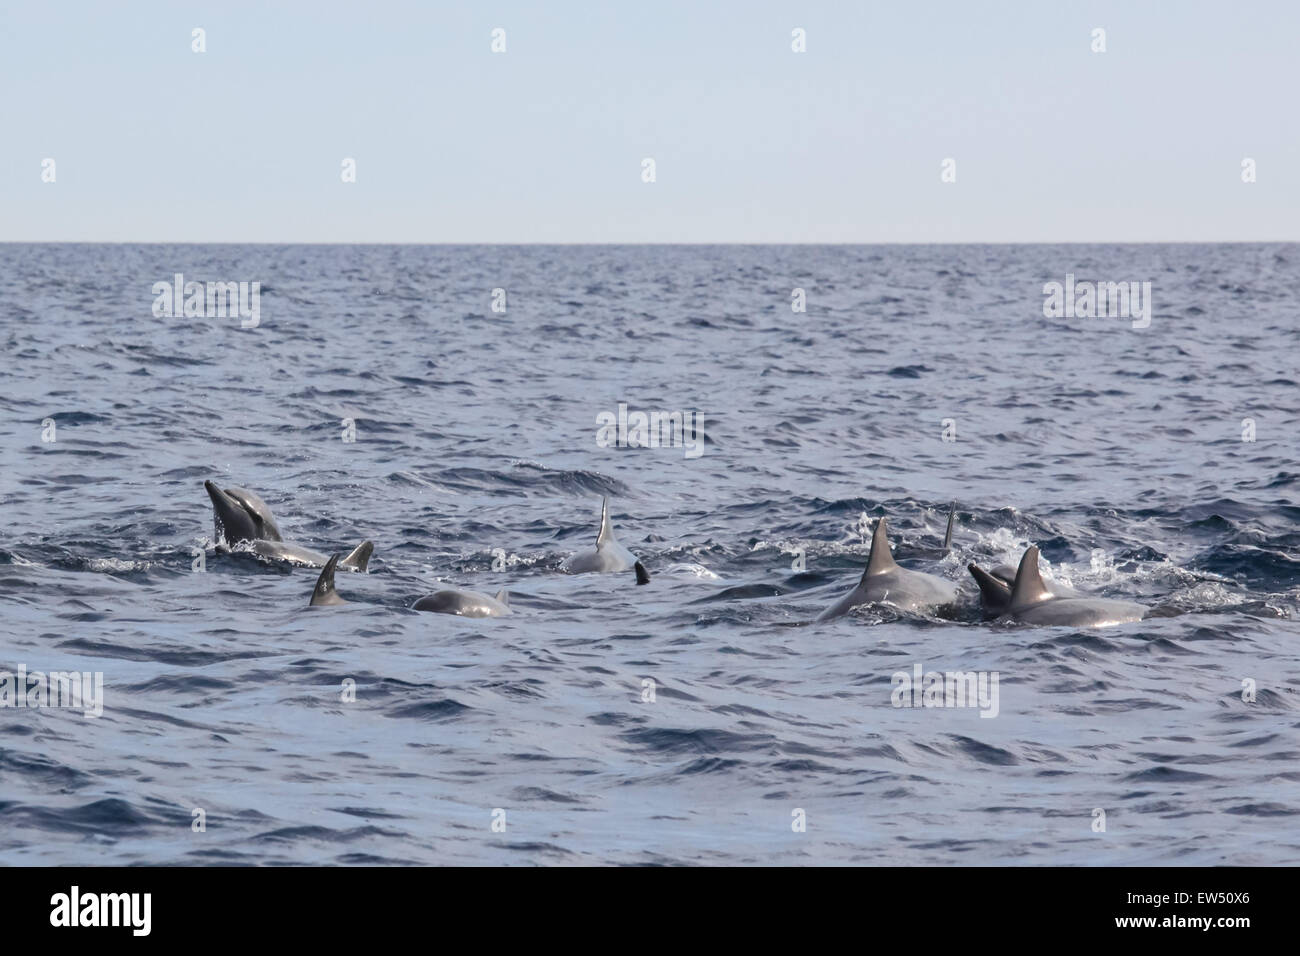 Wild dolphins indonesia Stock Photo